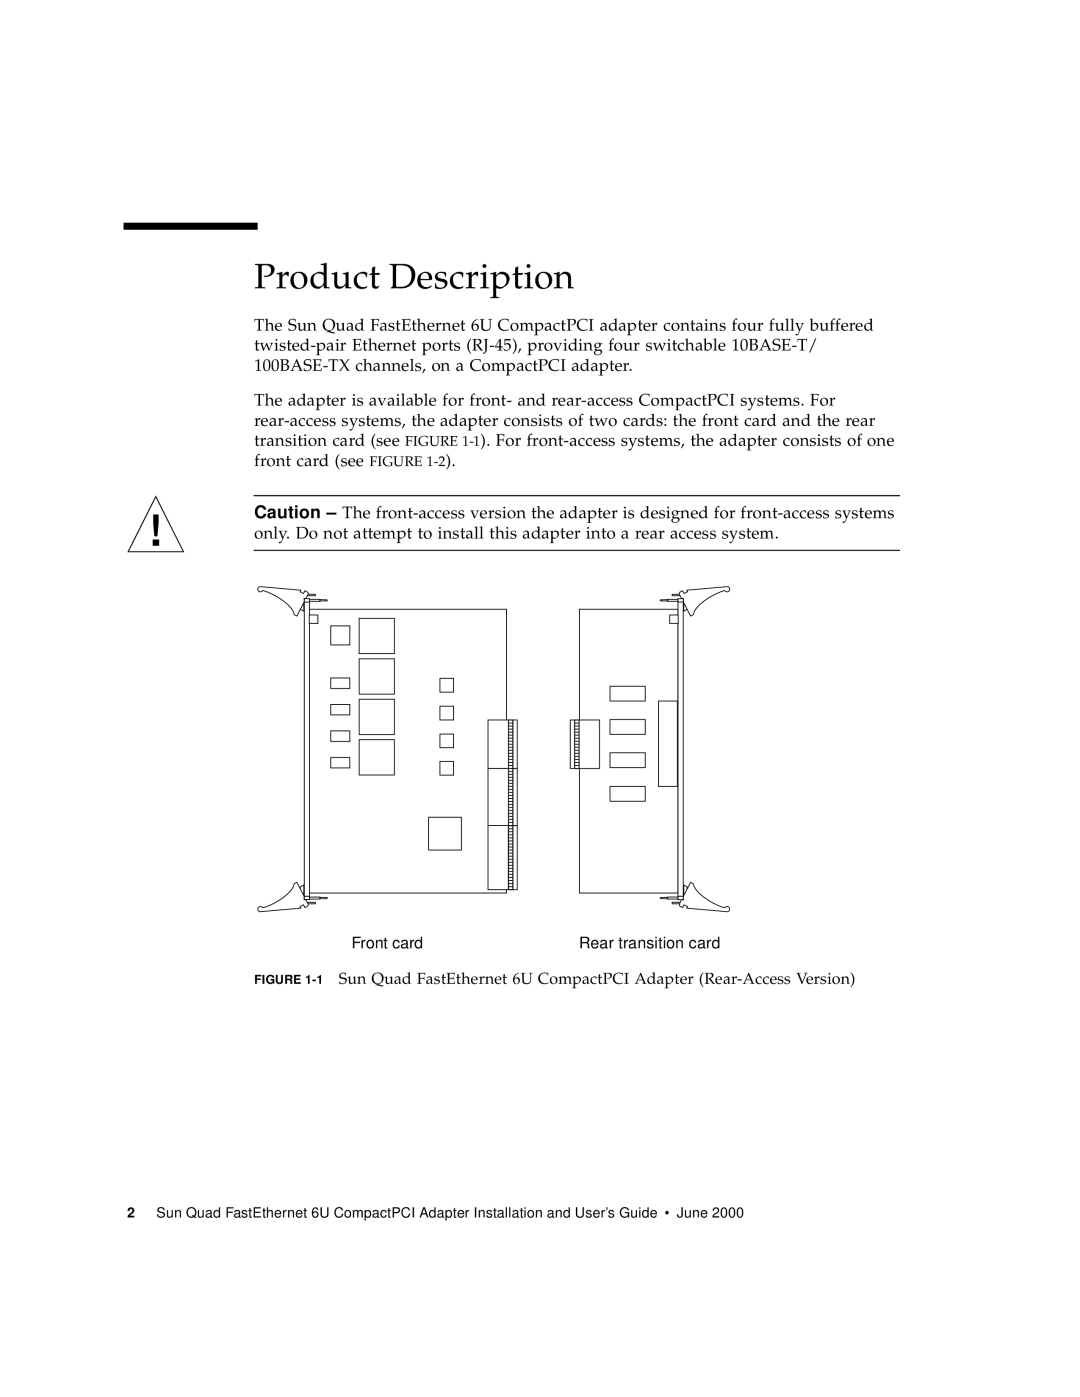 Sun Microsystems 6U manual Product Description, Front card 